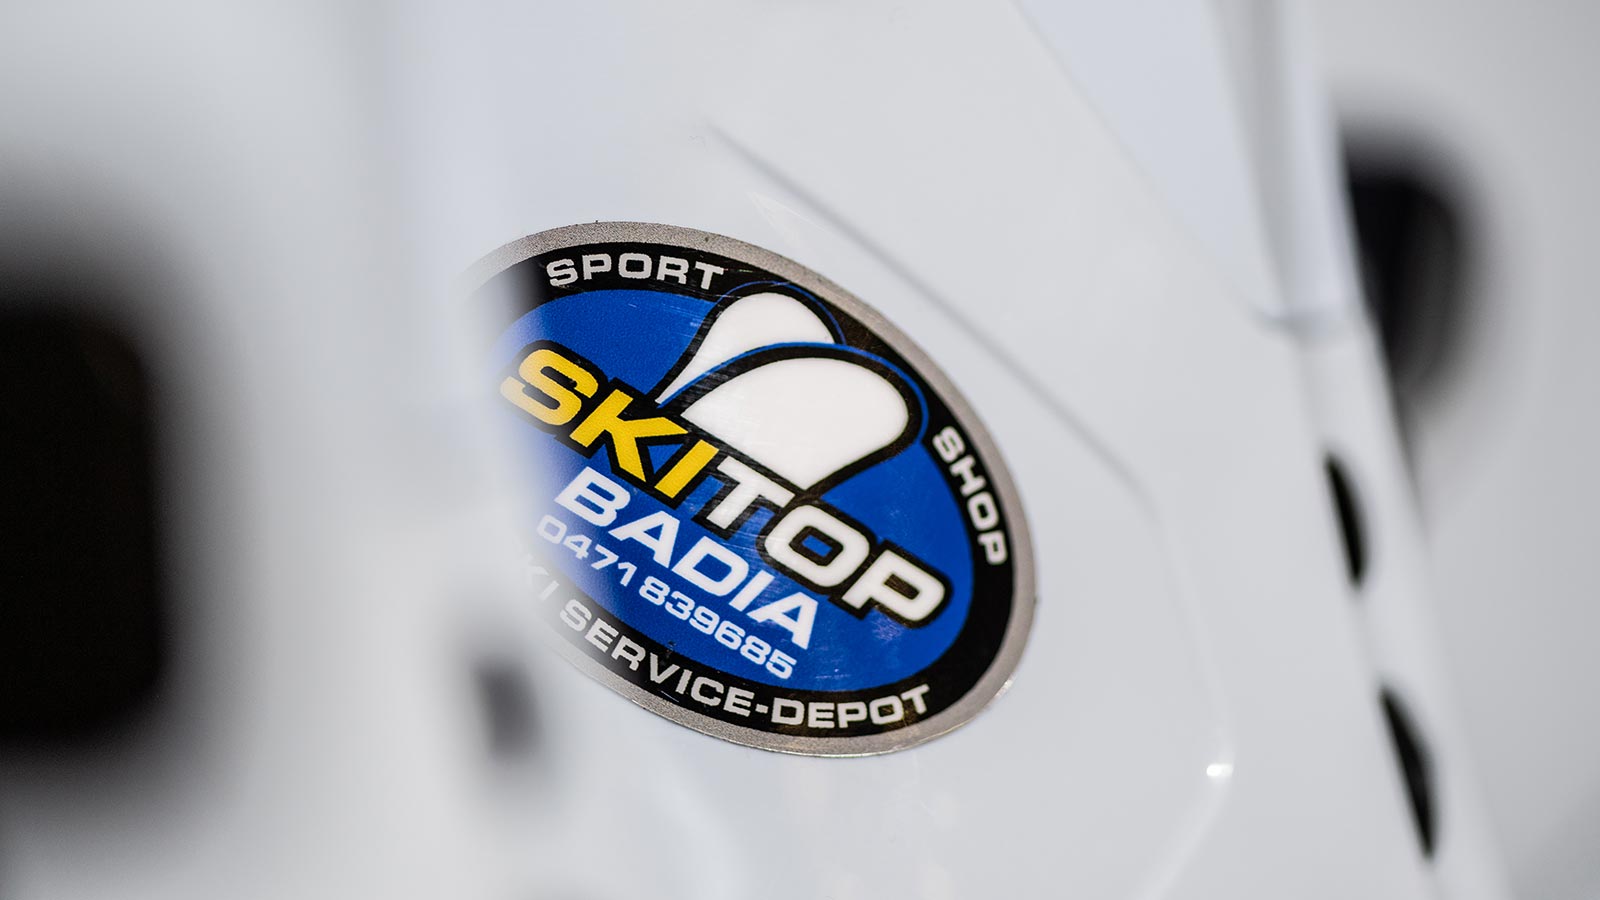 Detail of the Ski Top Badia logo